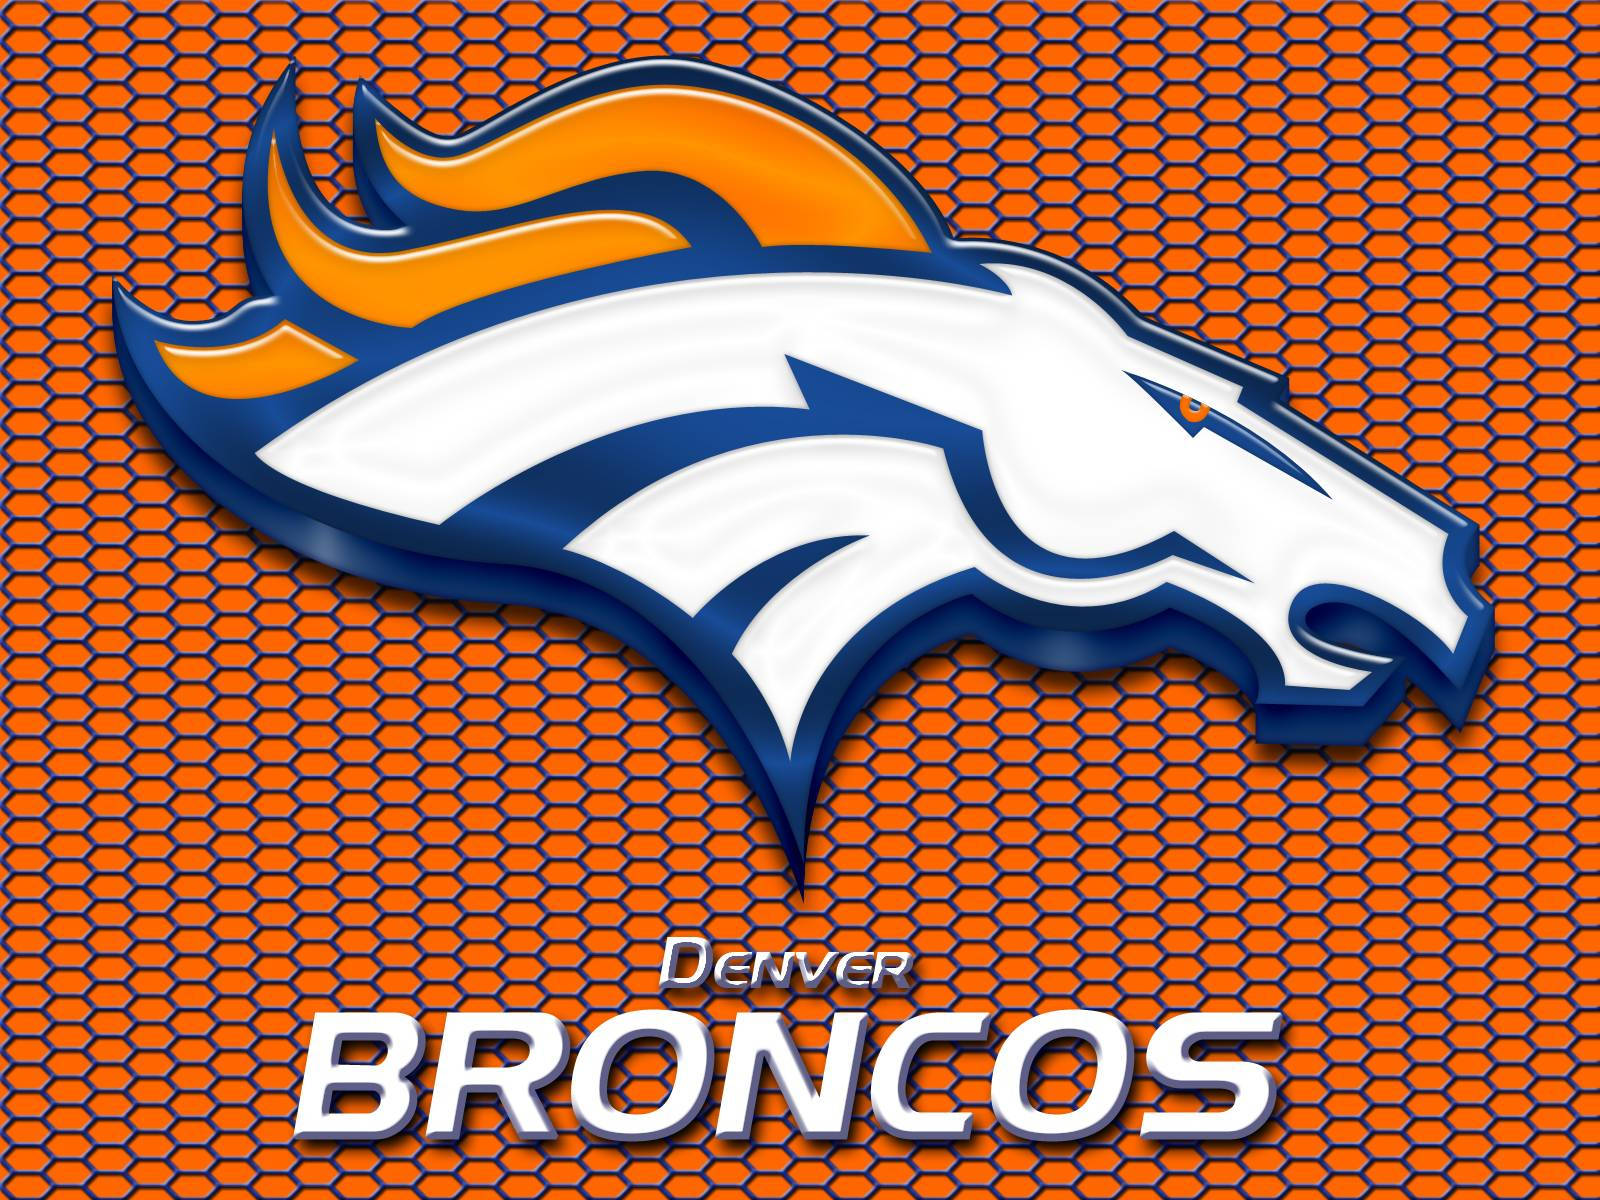 Denver Broncos 1600X1200 Wallpaper and Background Image